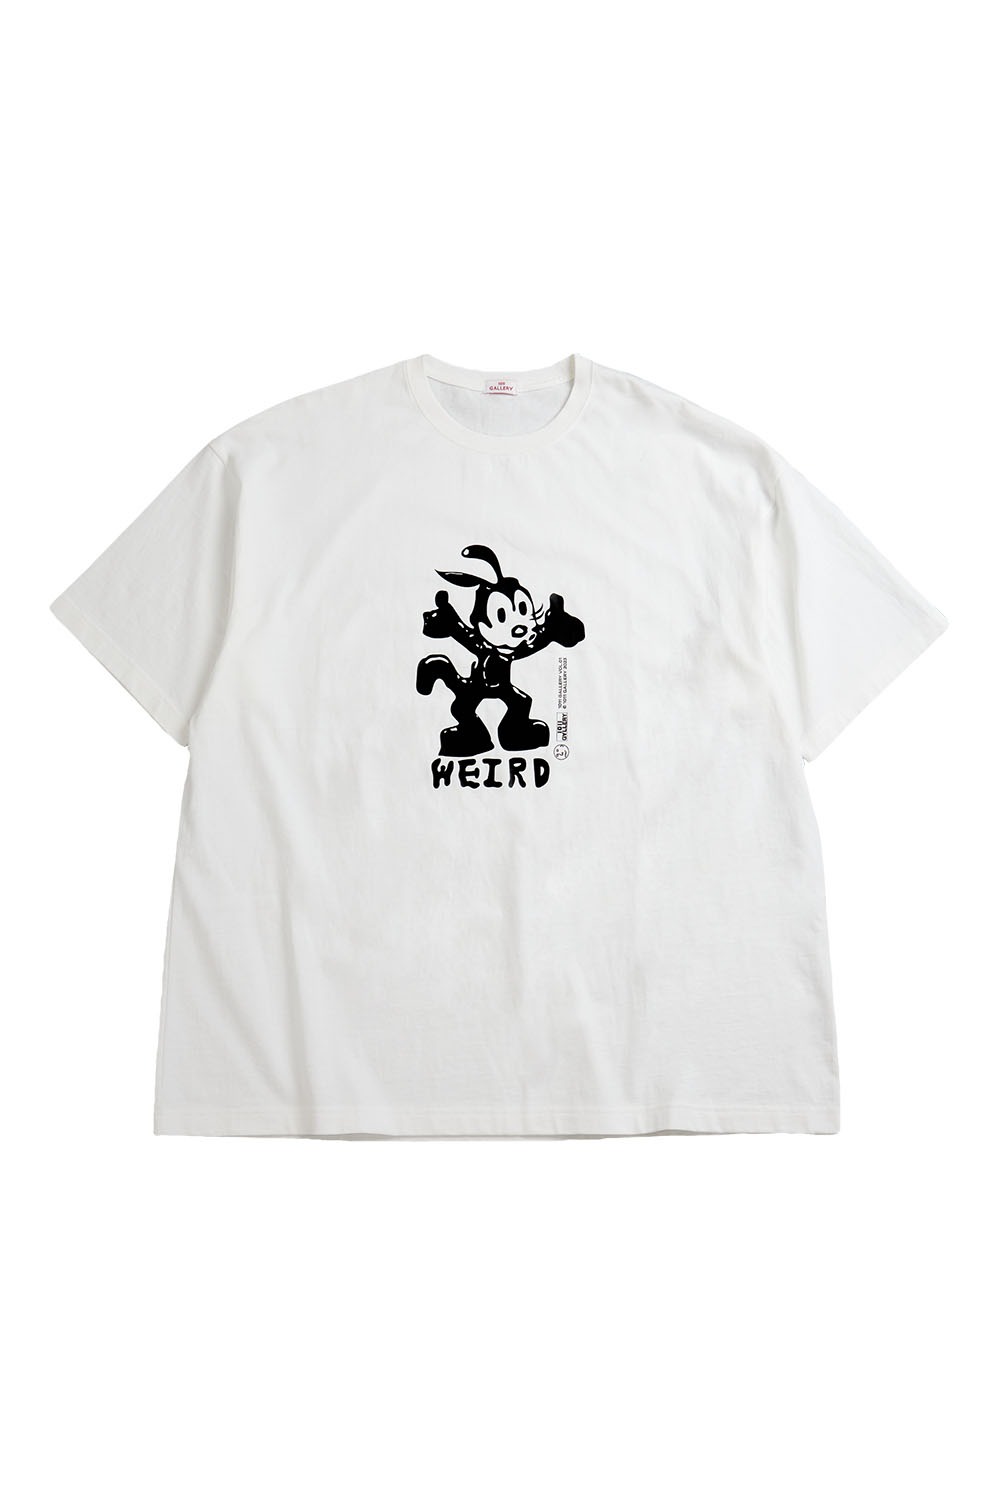 Gallery Overfit Rabbit T-shirt